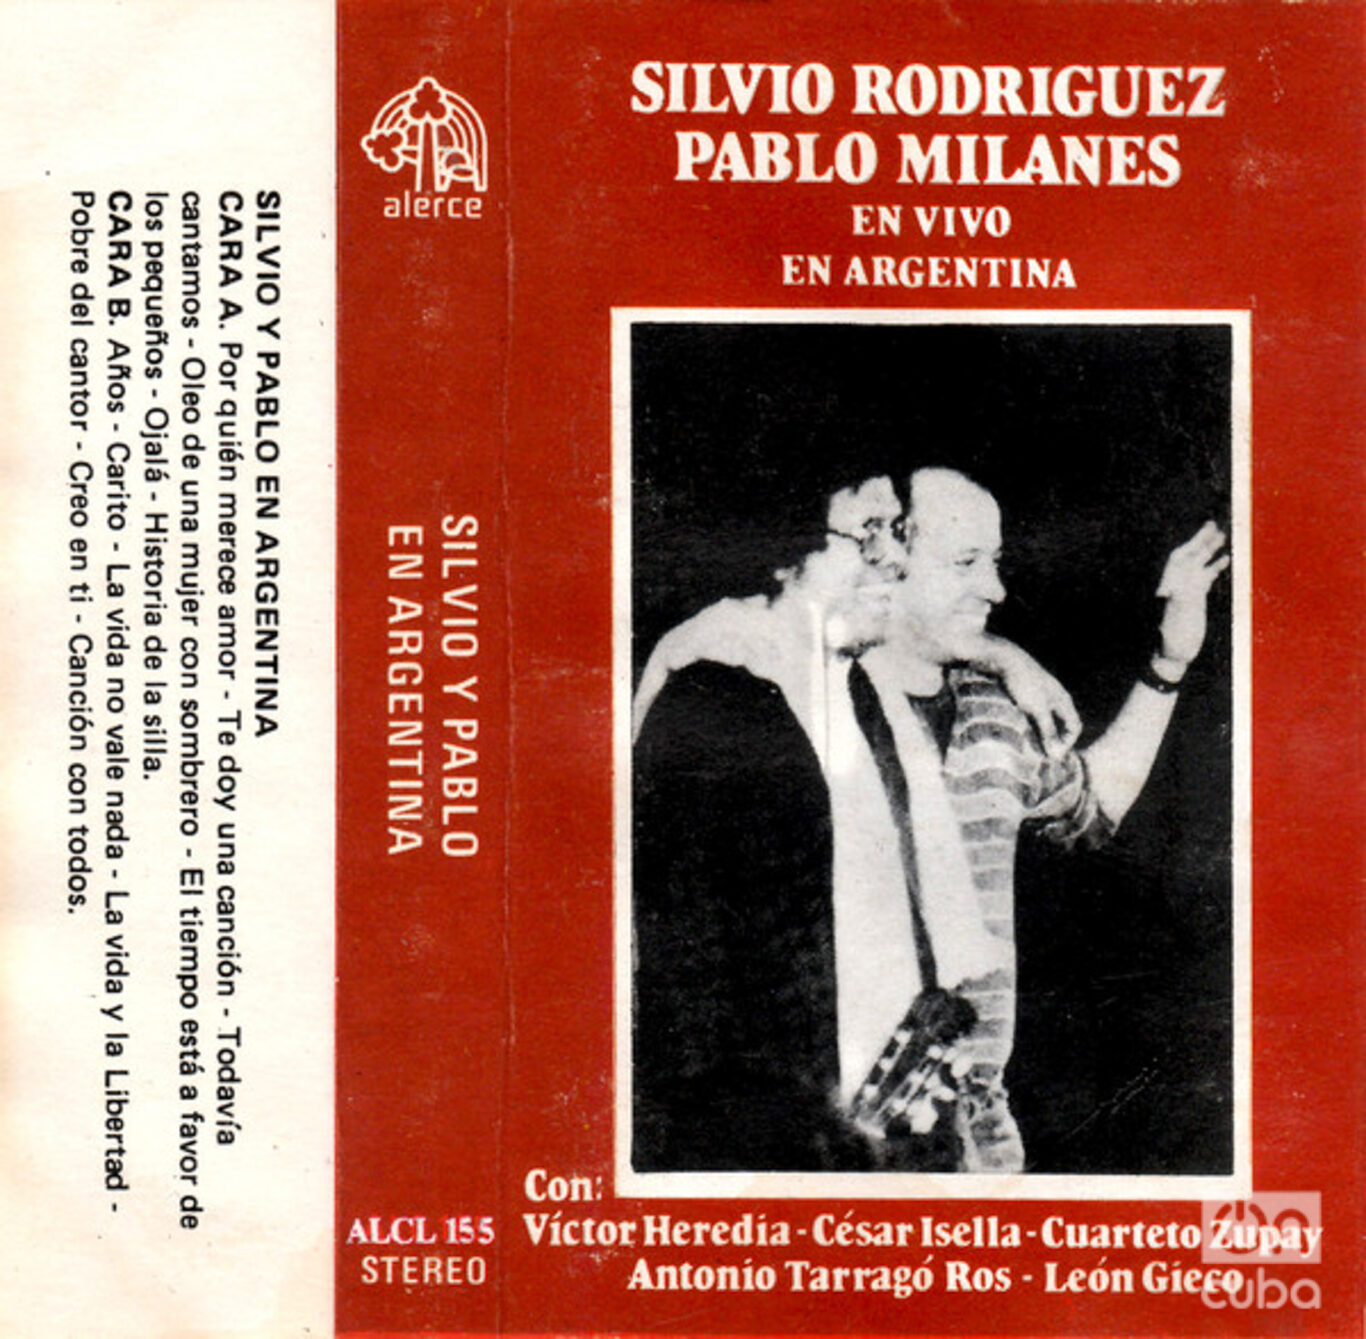 Silvio Rodríguez – Pablo Milanés: En vivo en Argentina published in 1984.